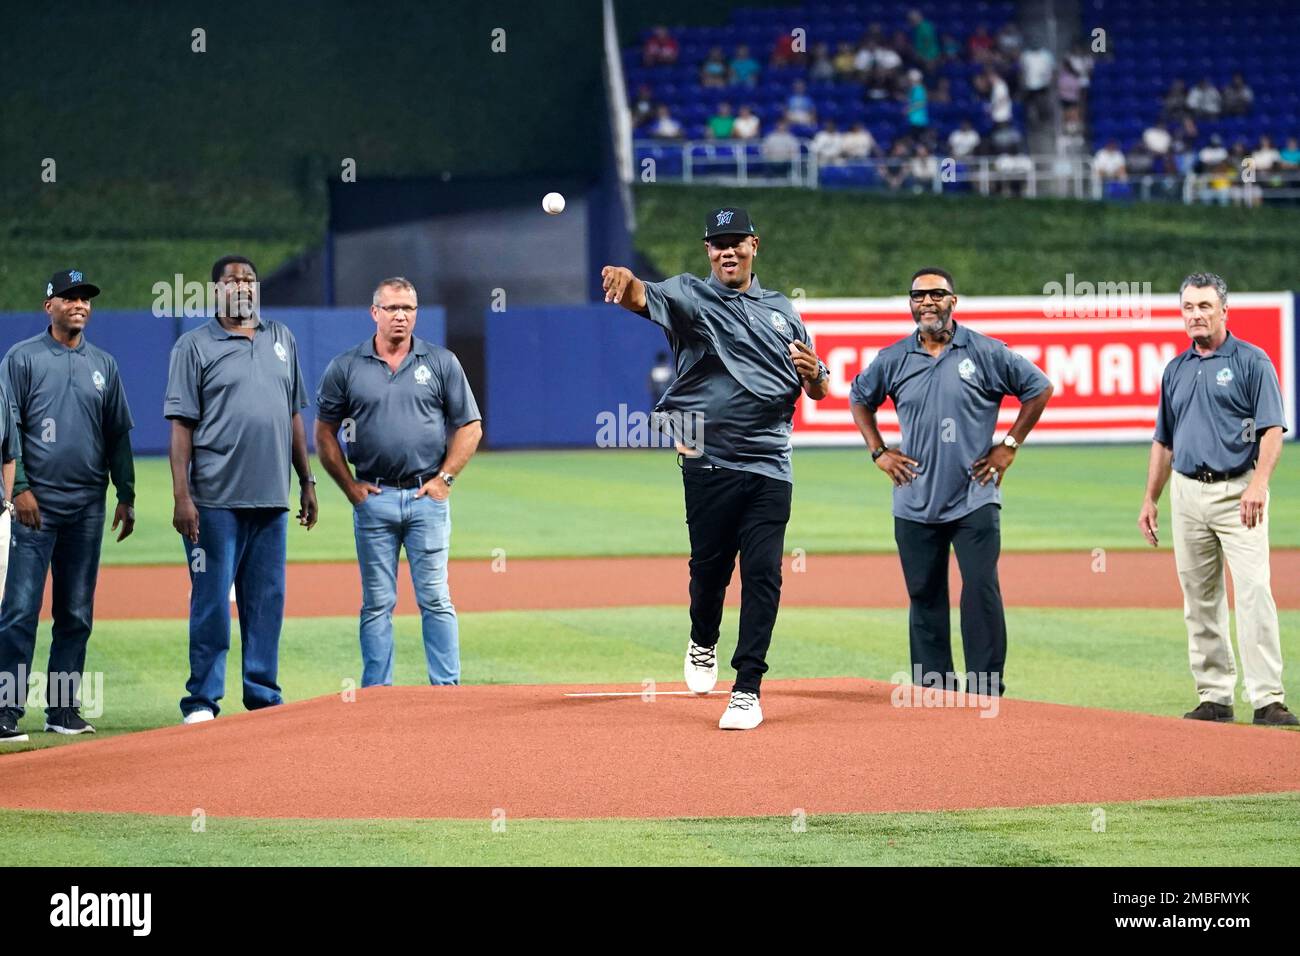 Former Florida Marlins player Livan Hernandez throws a ceremonial